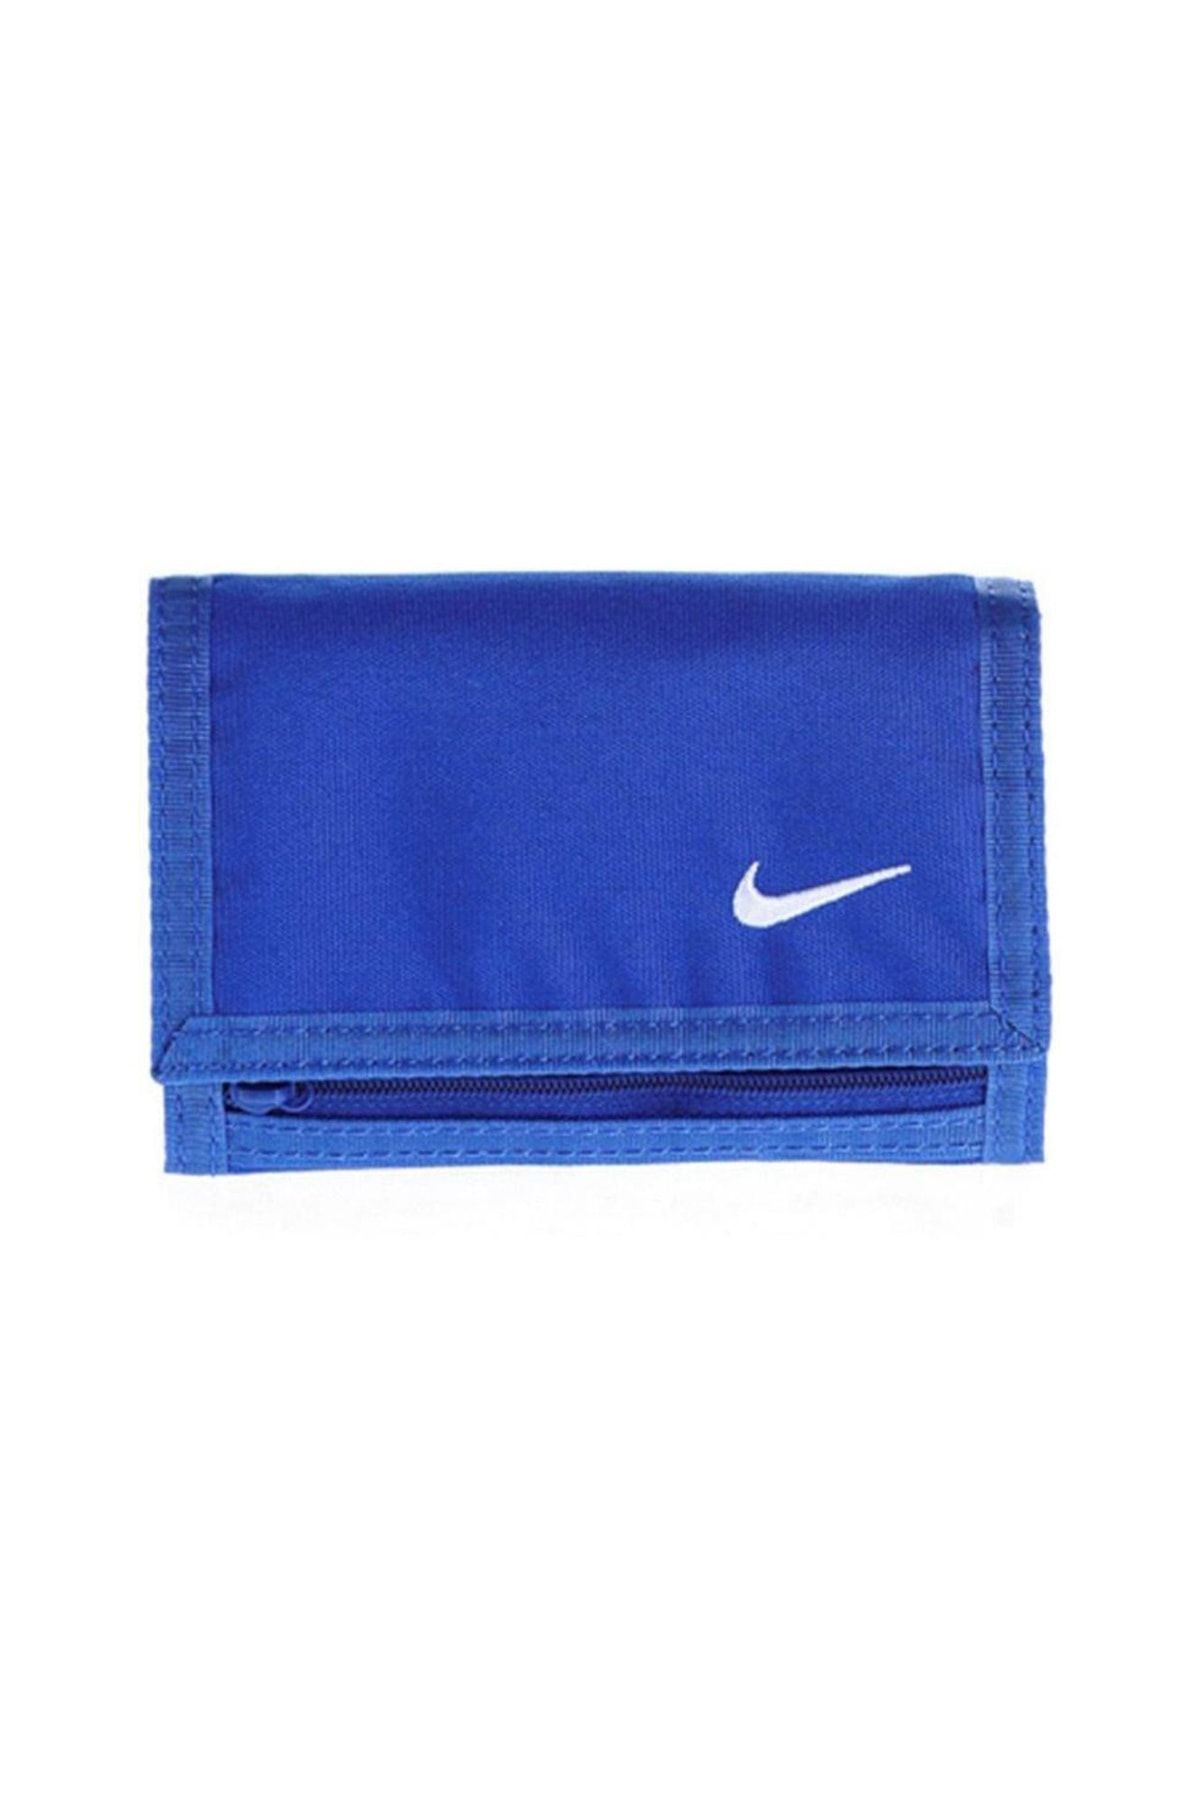 Nike Erkek Cüzdan - Basic Wallet - N.IA.08.413